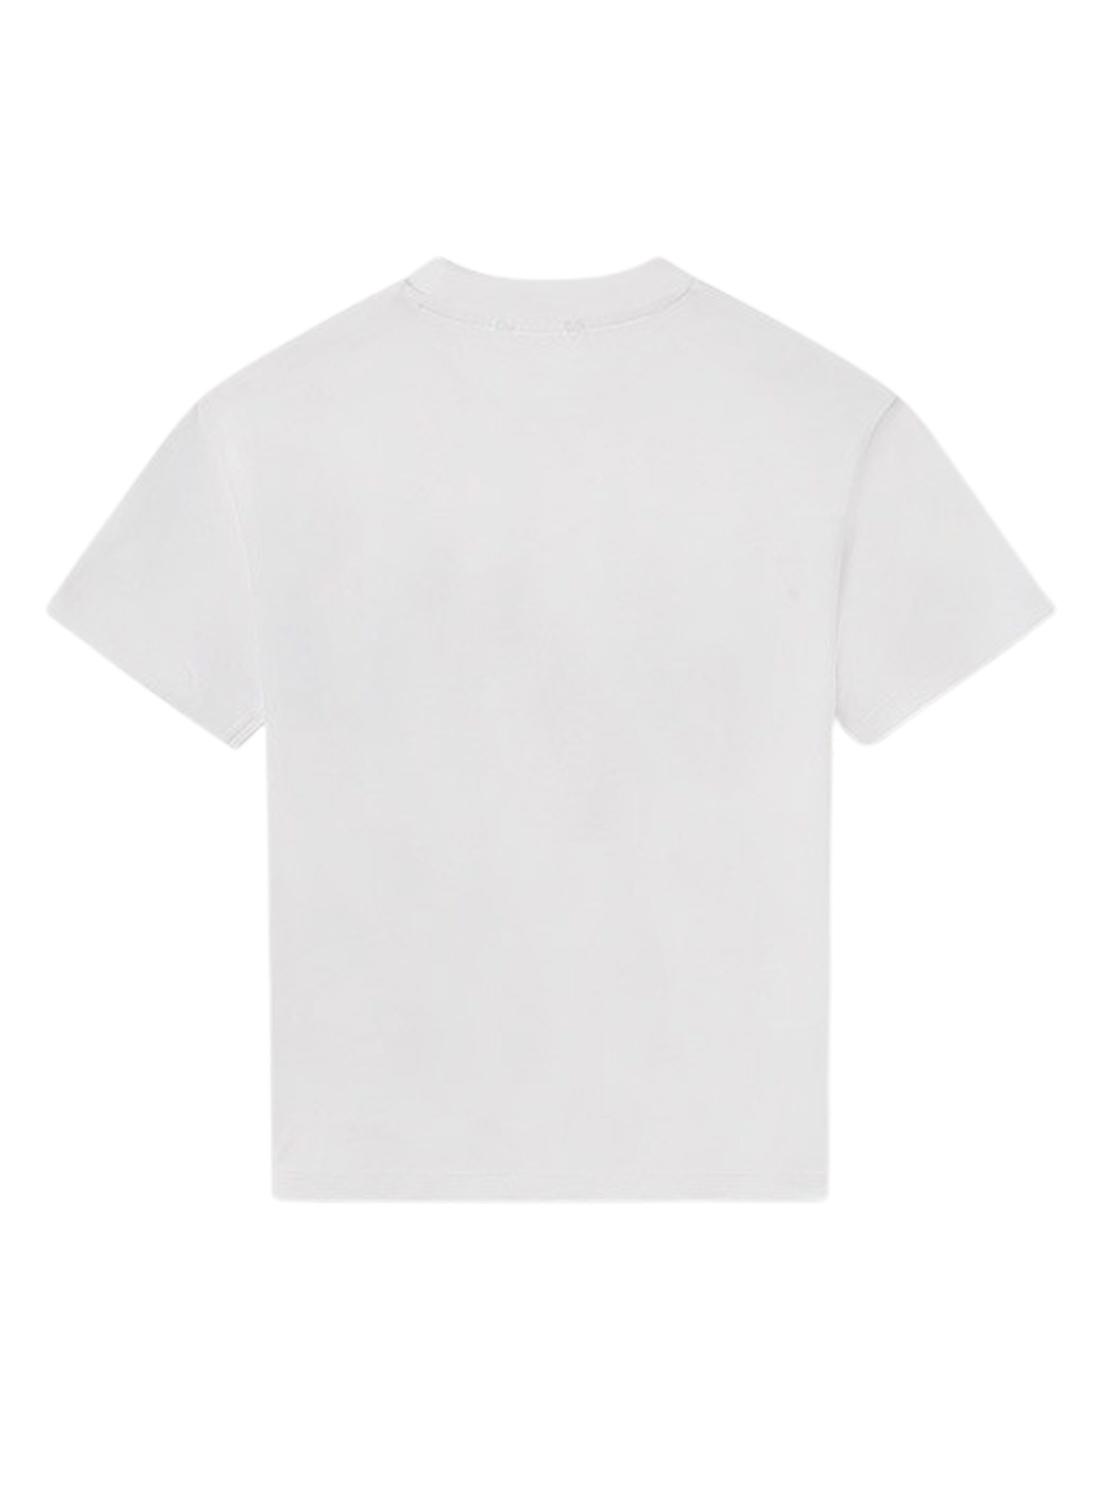 T-Shirt Mayoral Refresh Bianco per Bambino